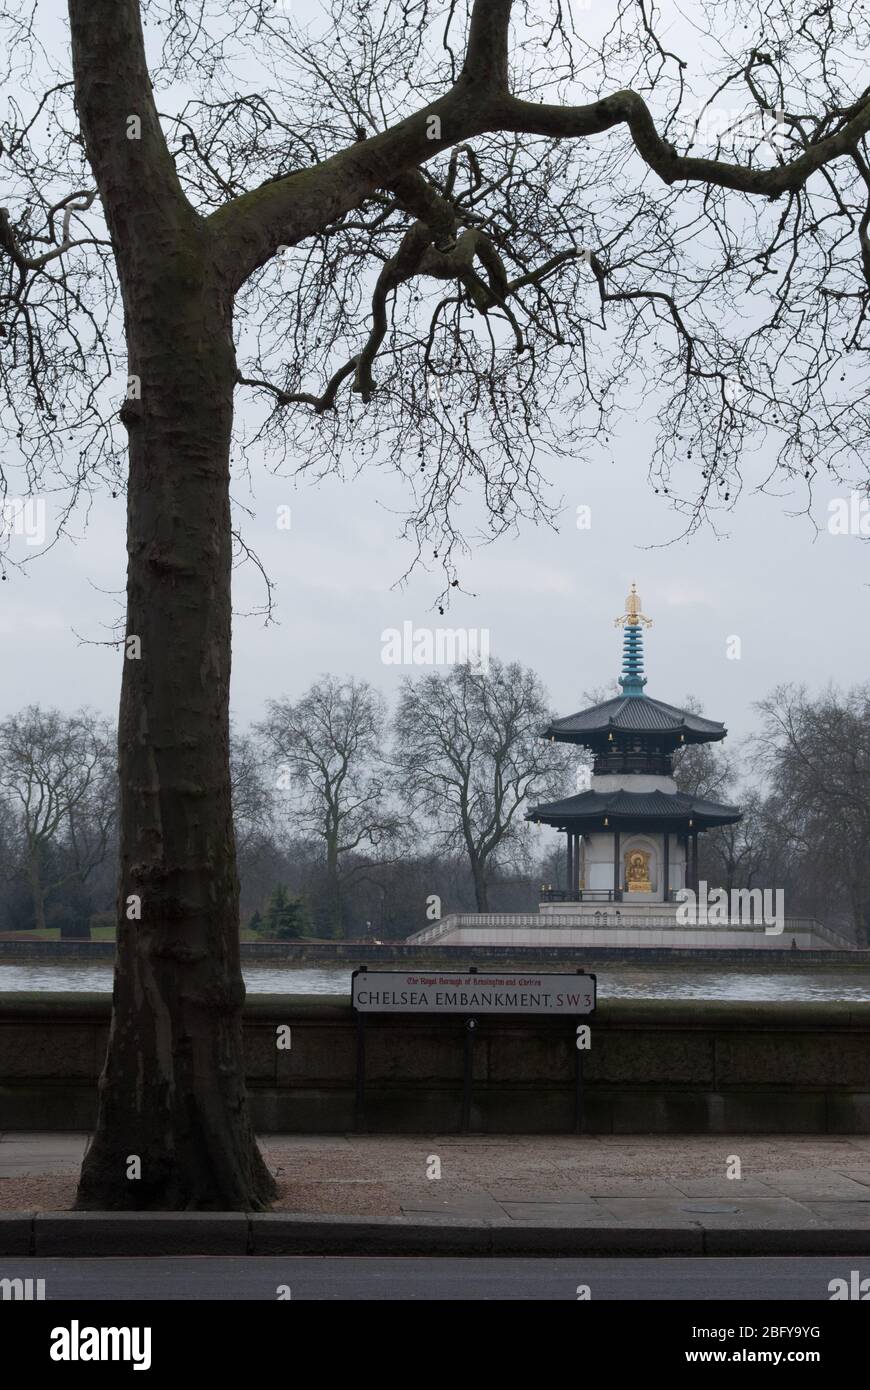 The London Peace Pagoda, Battersea Park, Carriage Drive North, Battersea, London SW11 4NJ Stock Photo